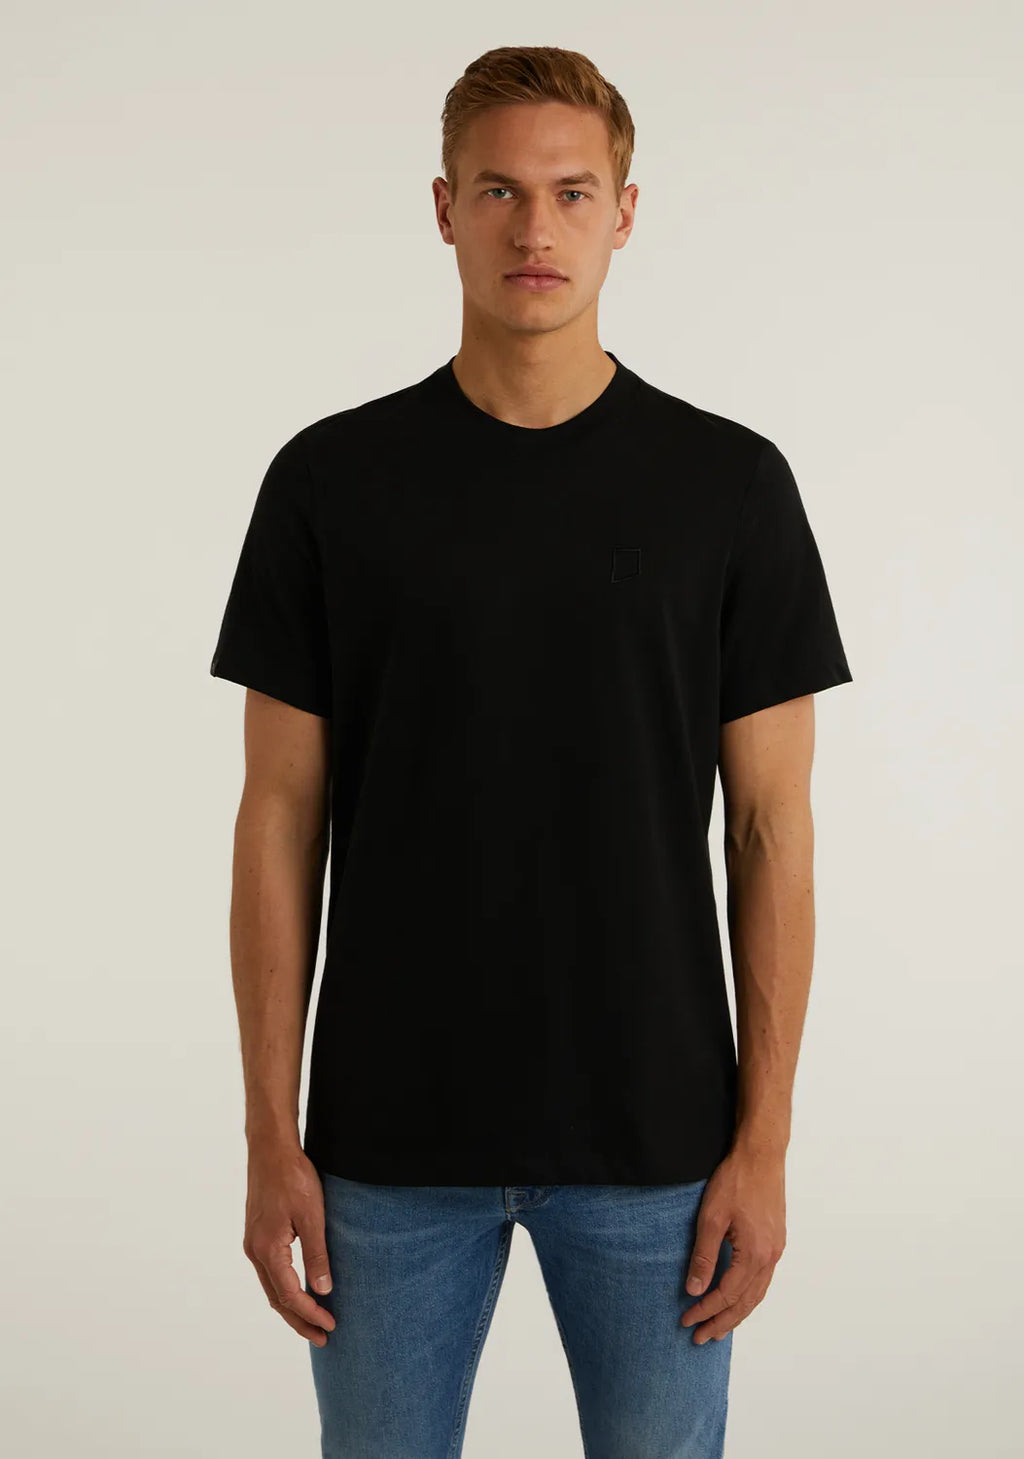 Yeans T-Shirts Shop Online – Halle